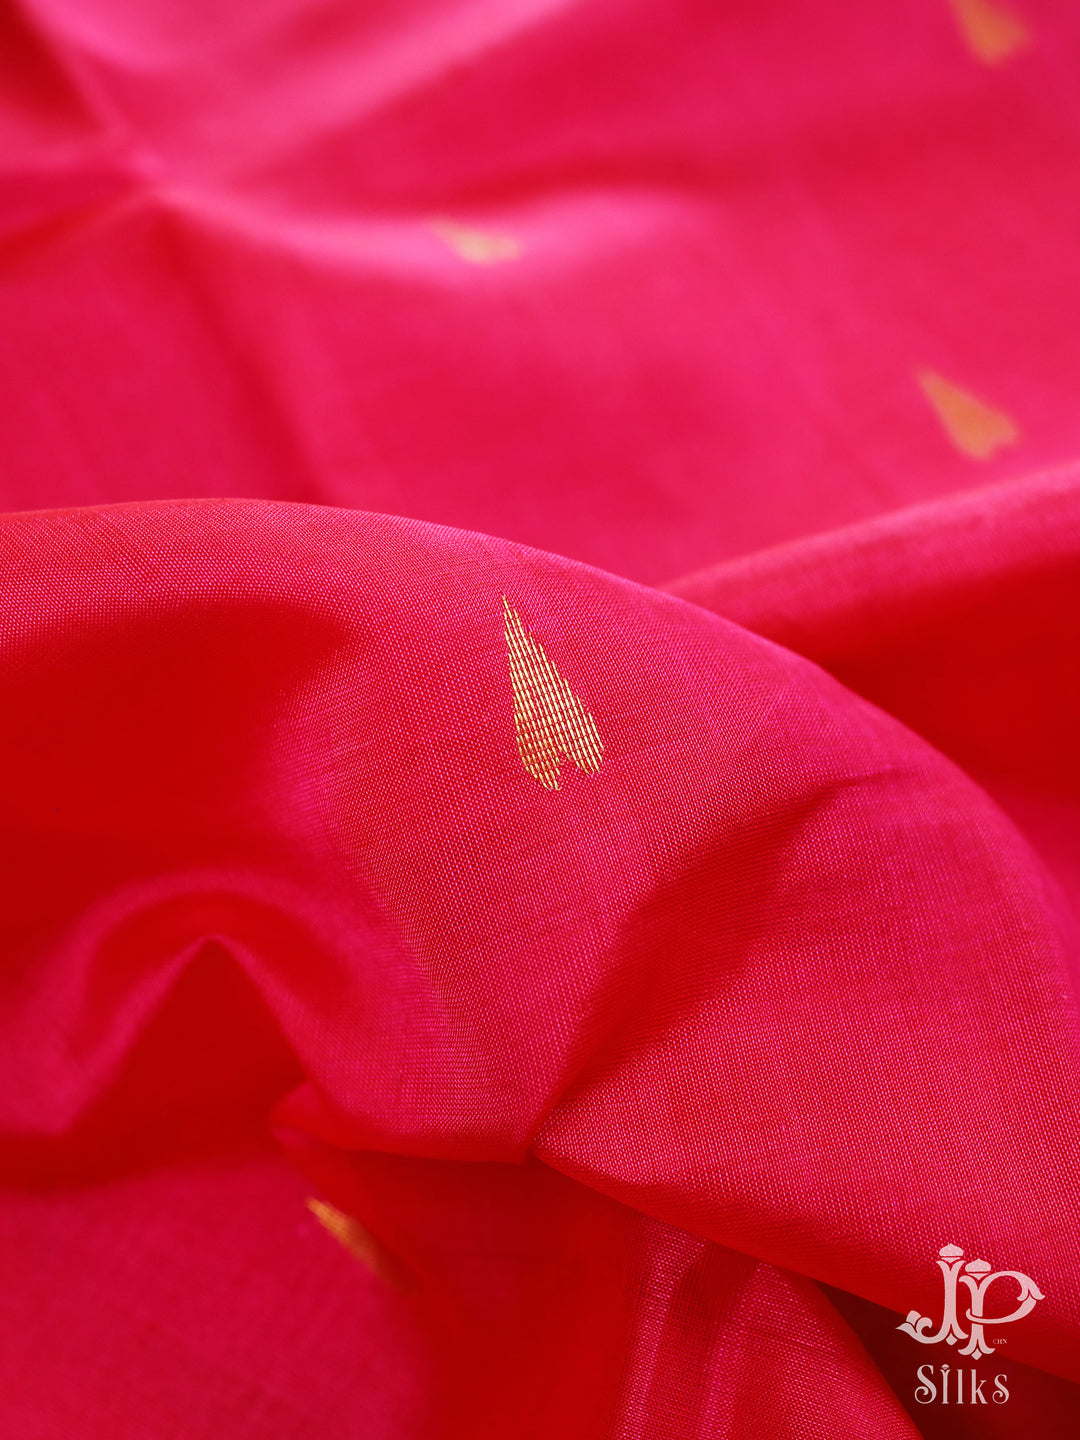 Reddish Pink Silk Cotton Saree - D7416 - View 1